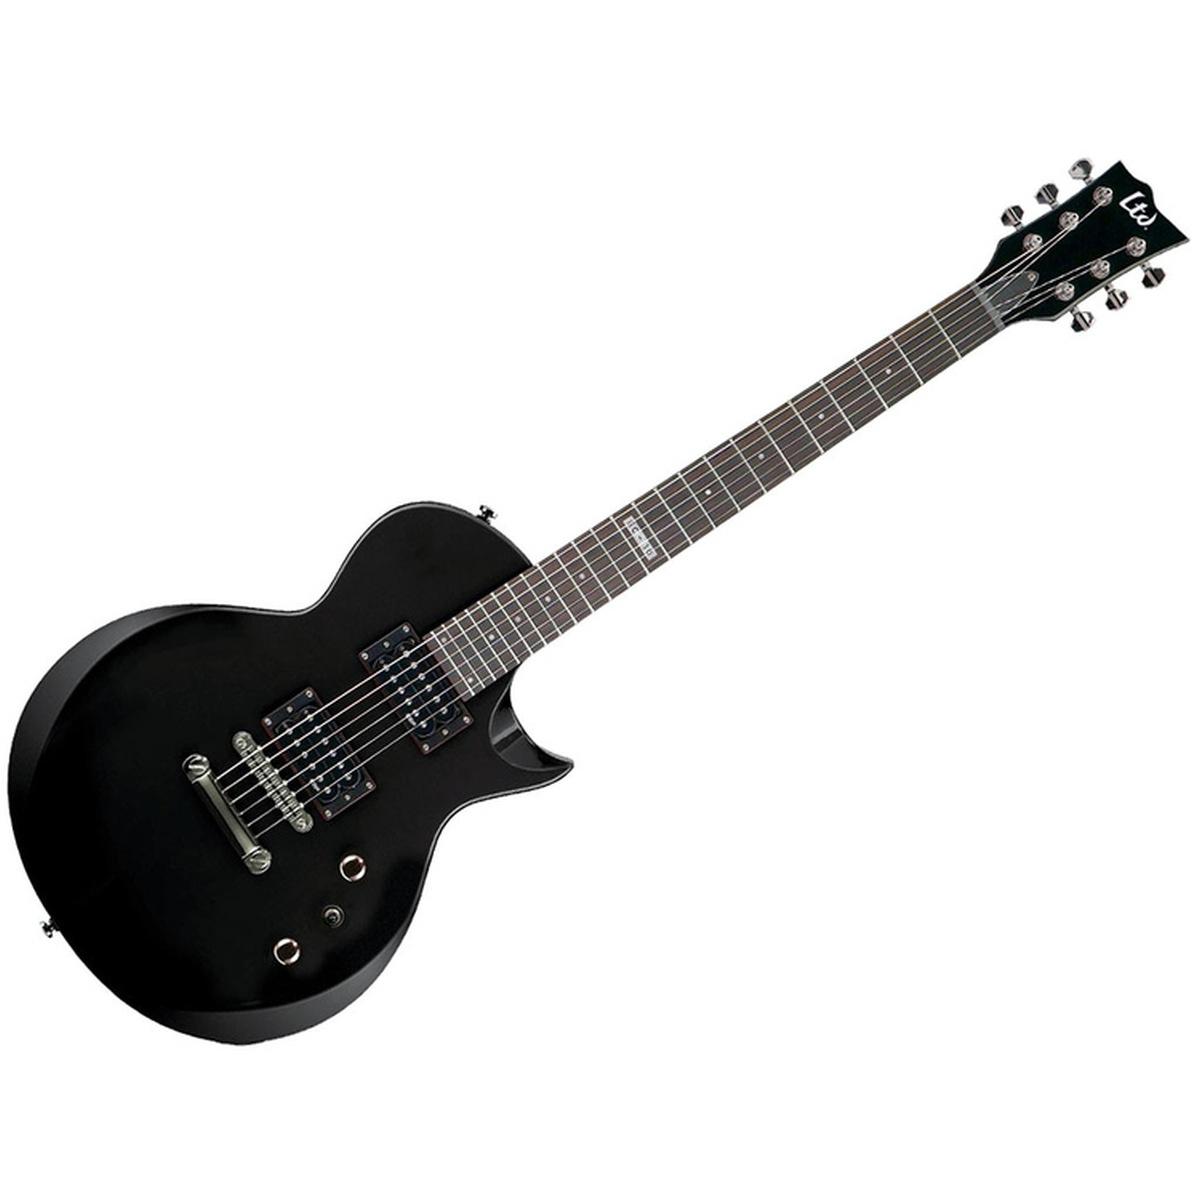 Esp Ltd Ec10 Black chitarra elettrica con borsa